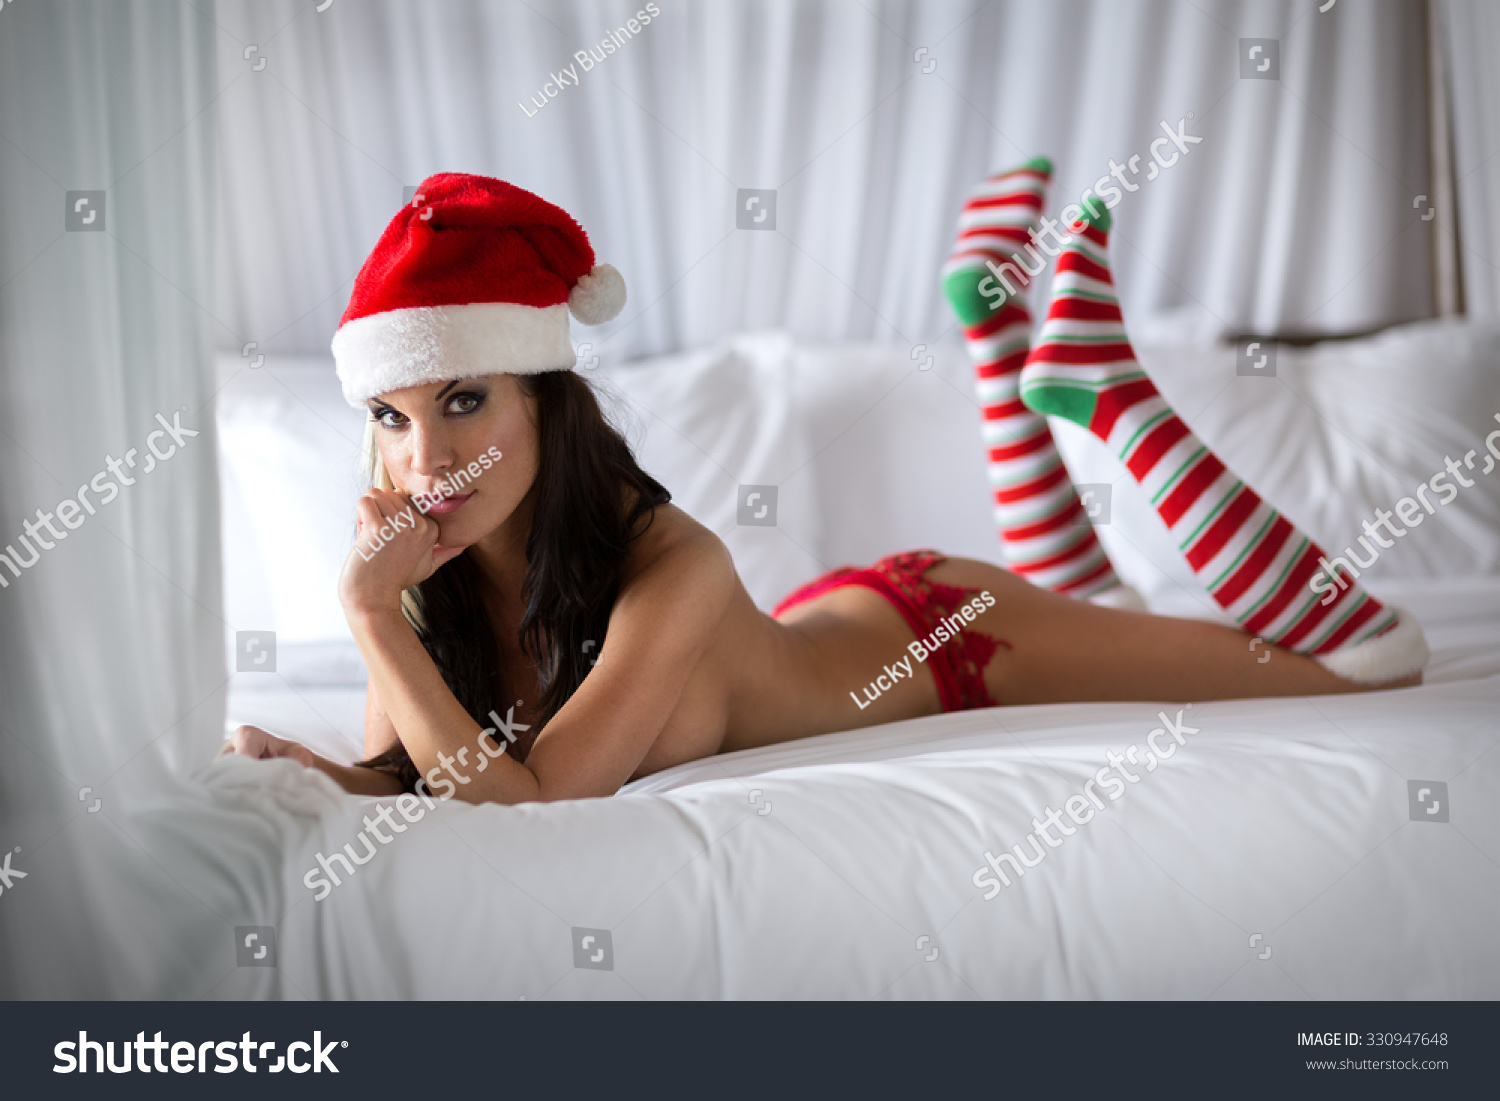 Seductive Santa Helper Topless Lying On Stock Photo 330947648 Shutterstock.